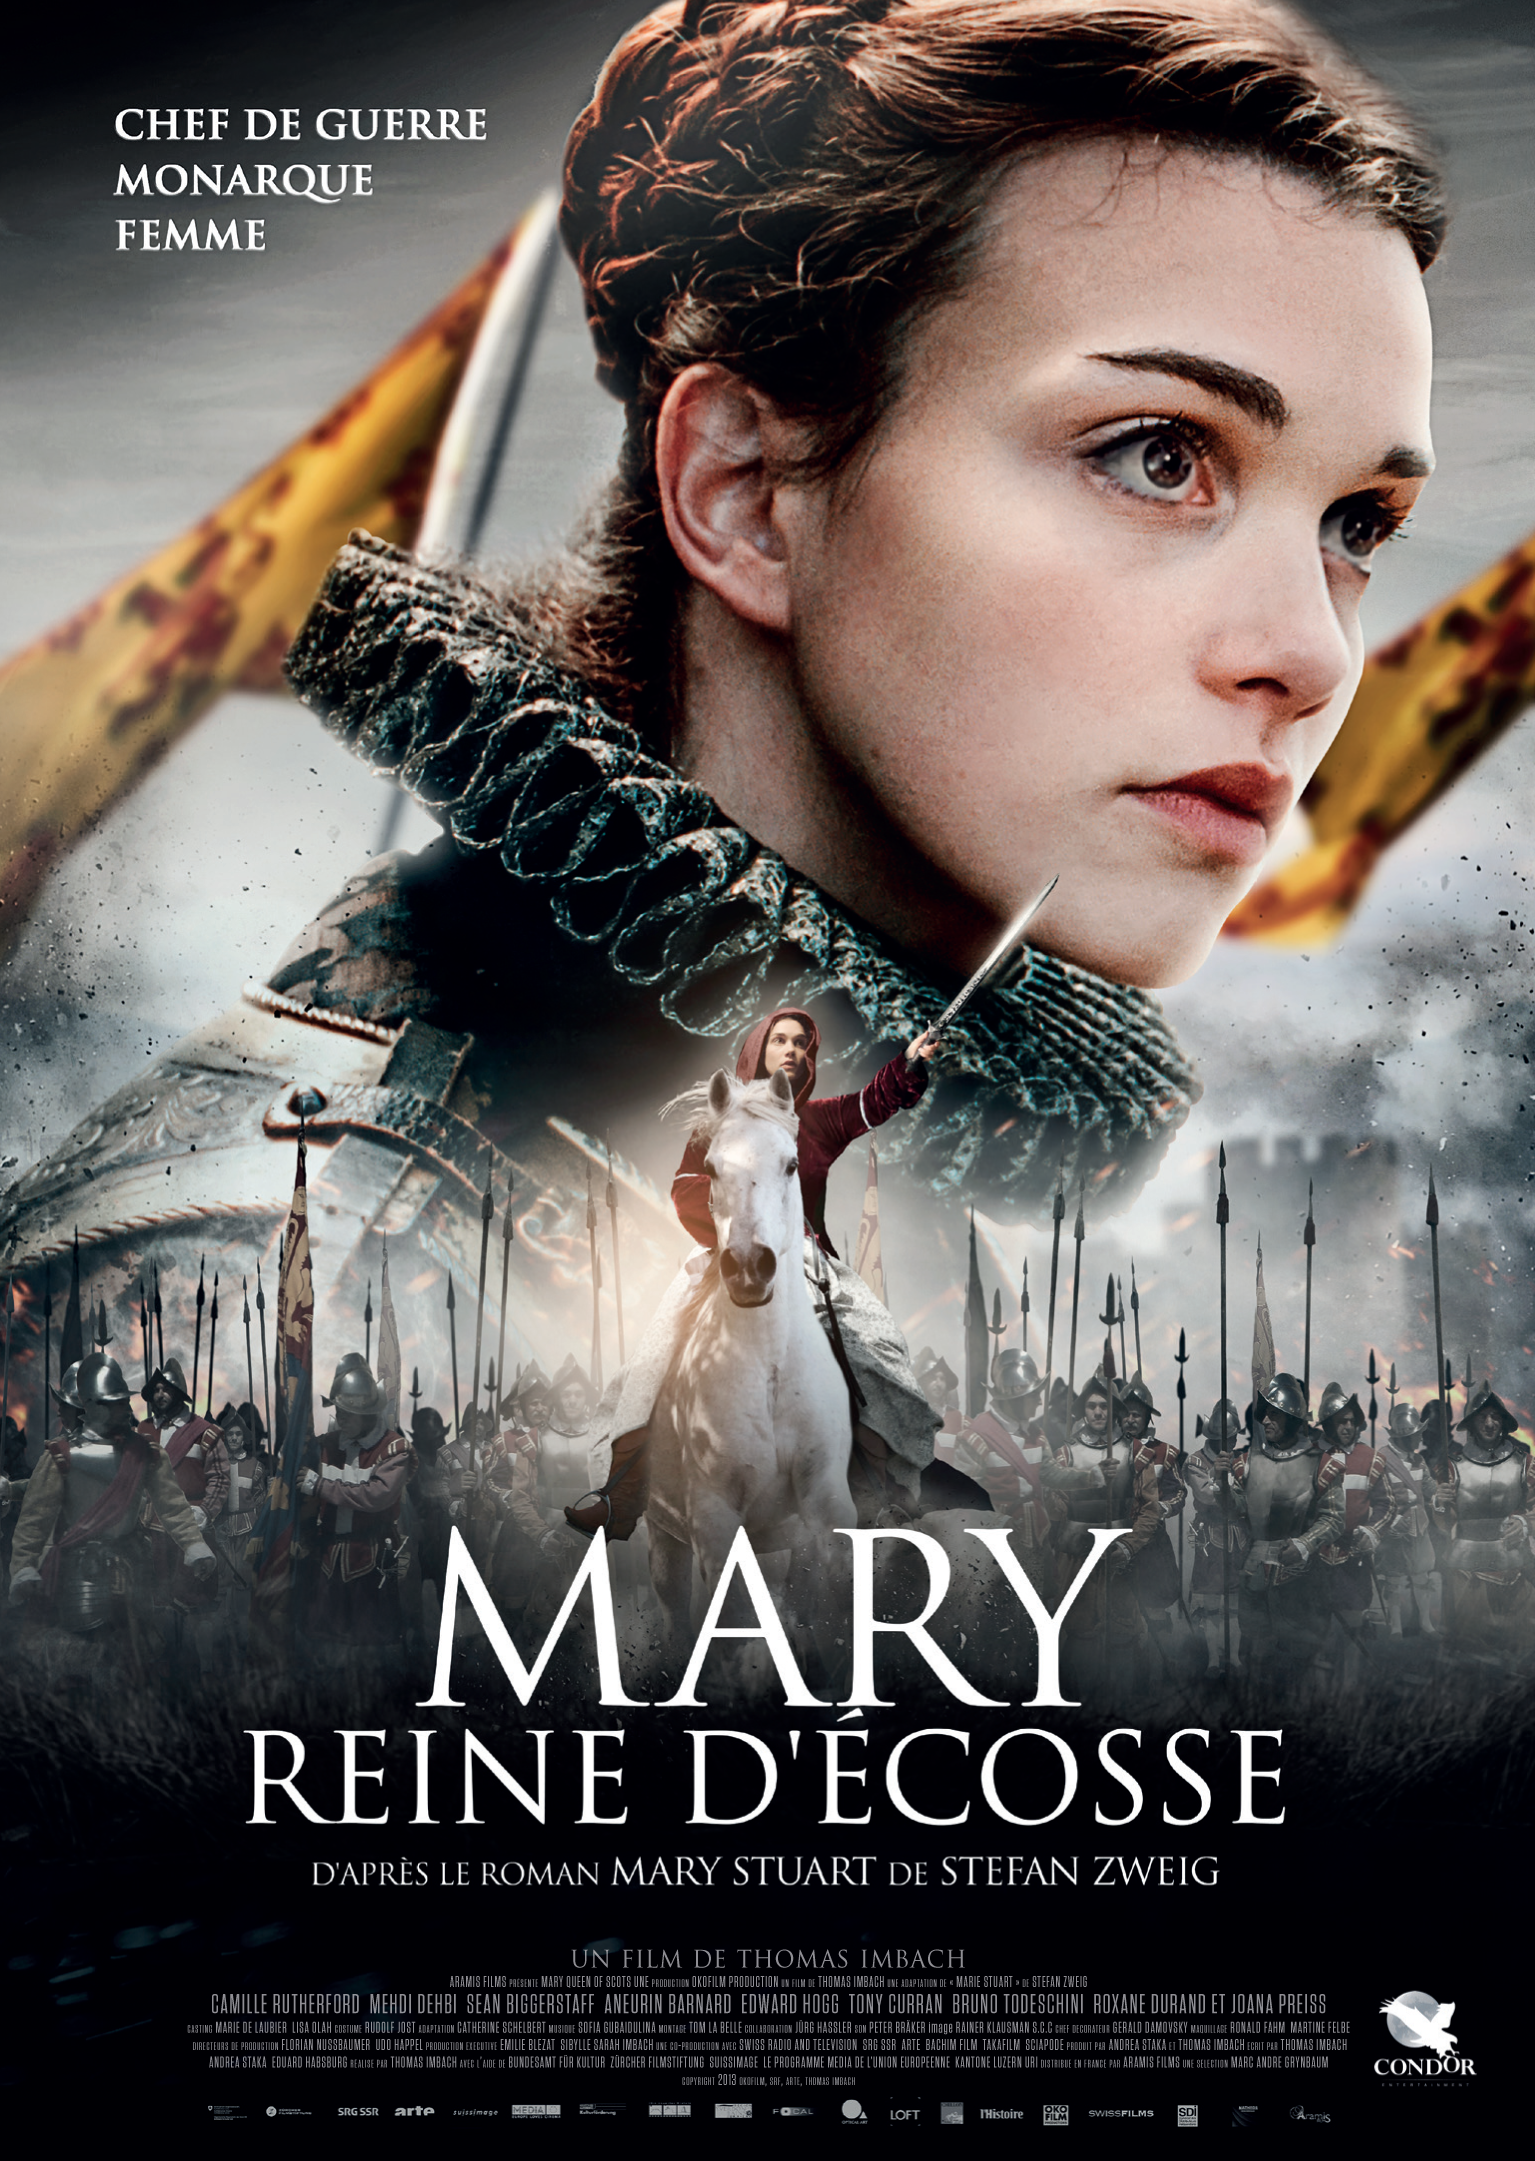 Mary Reine d’Écosse - Film (2014) streaming VF gratuit complet